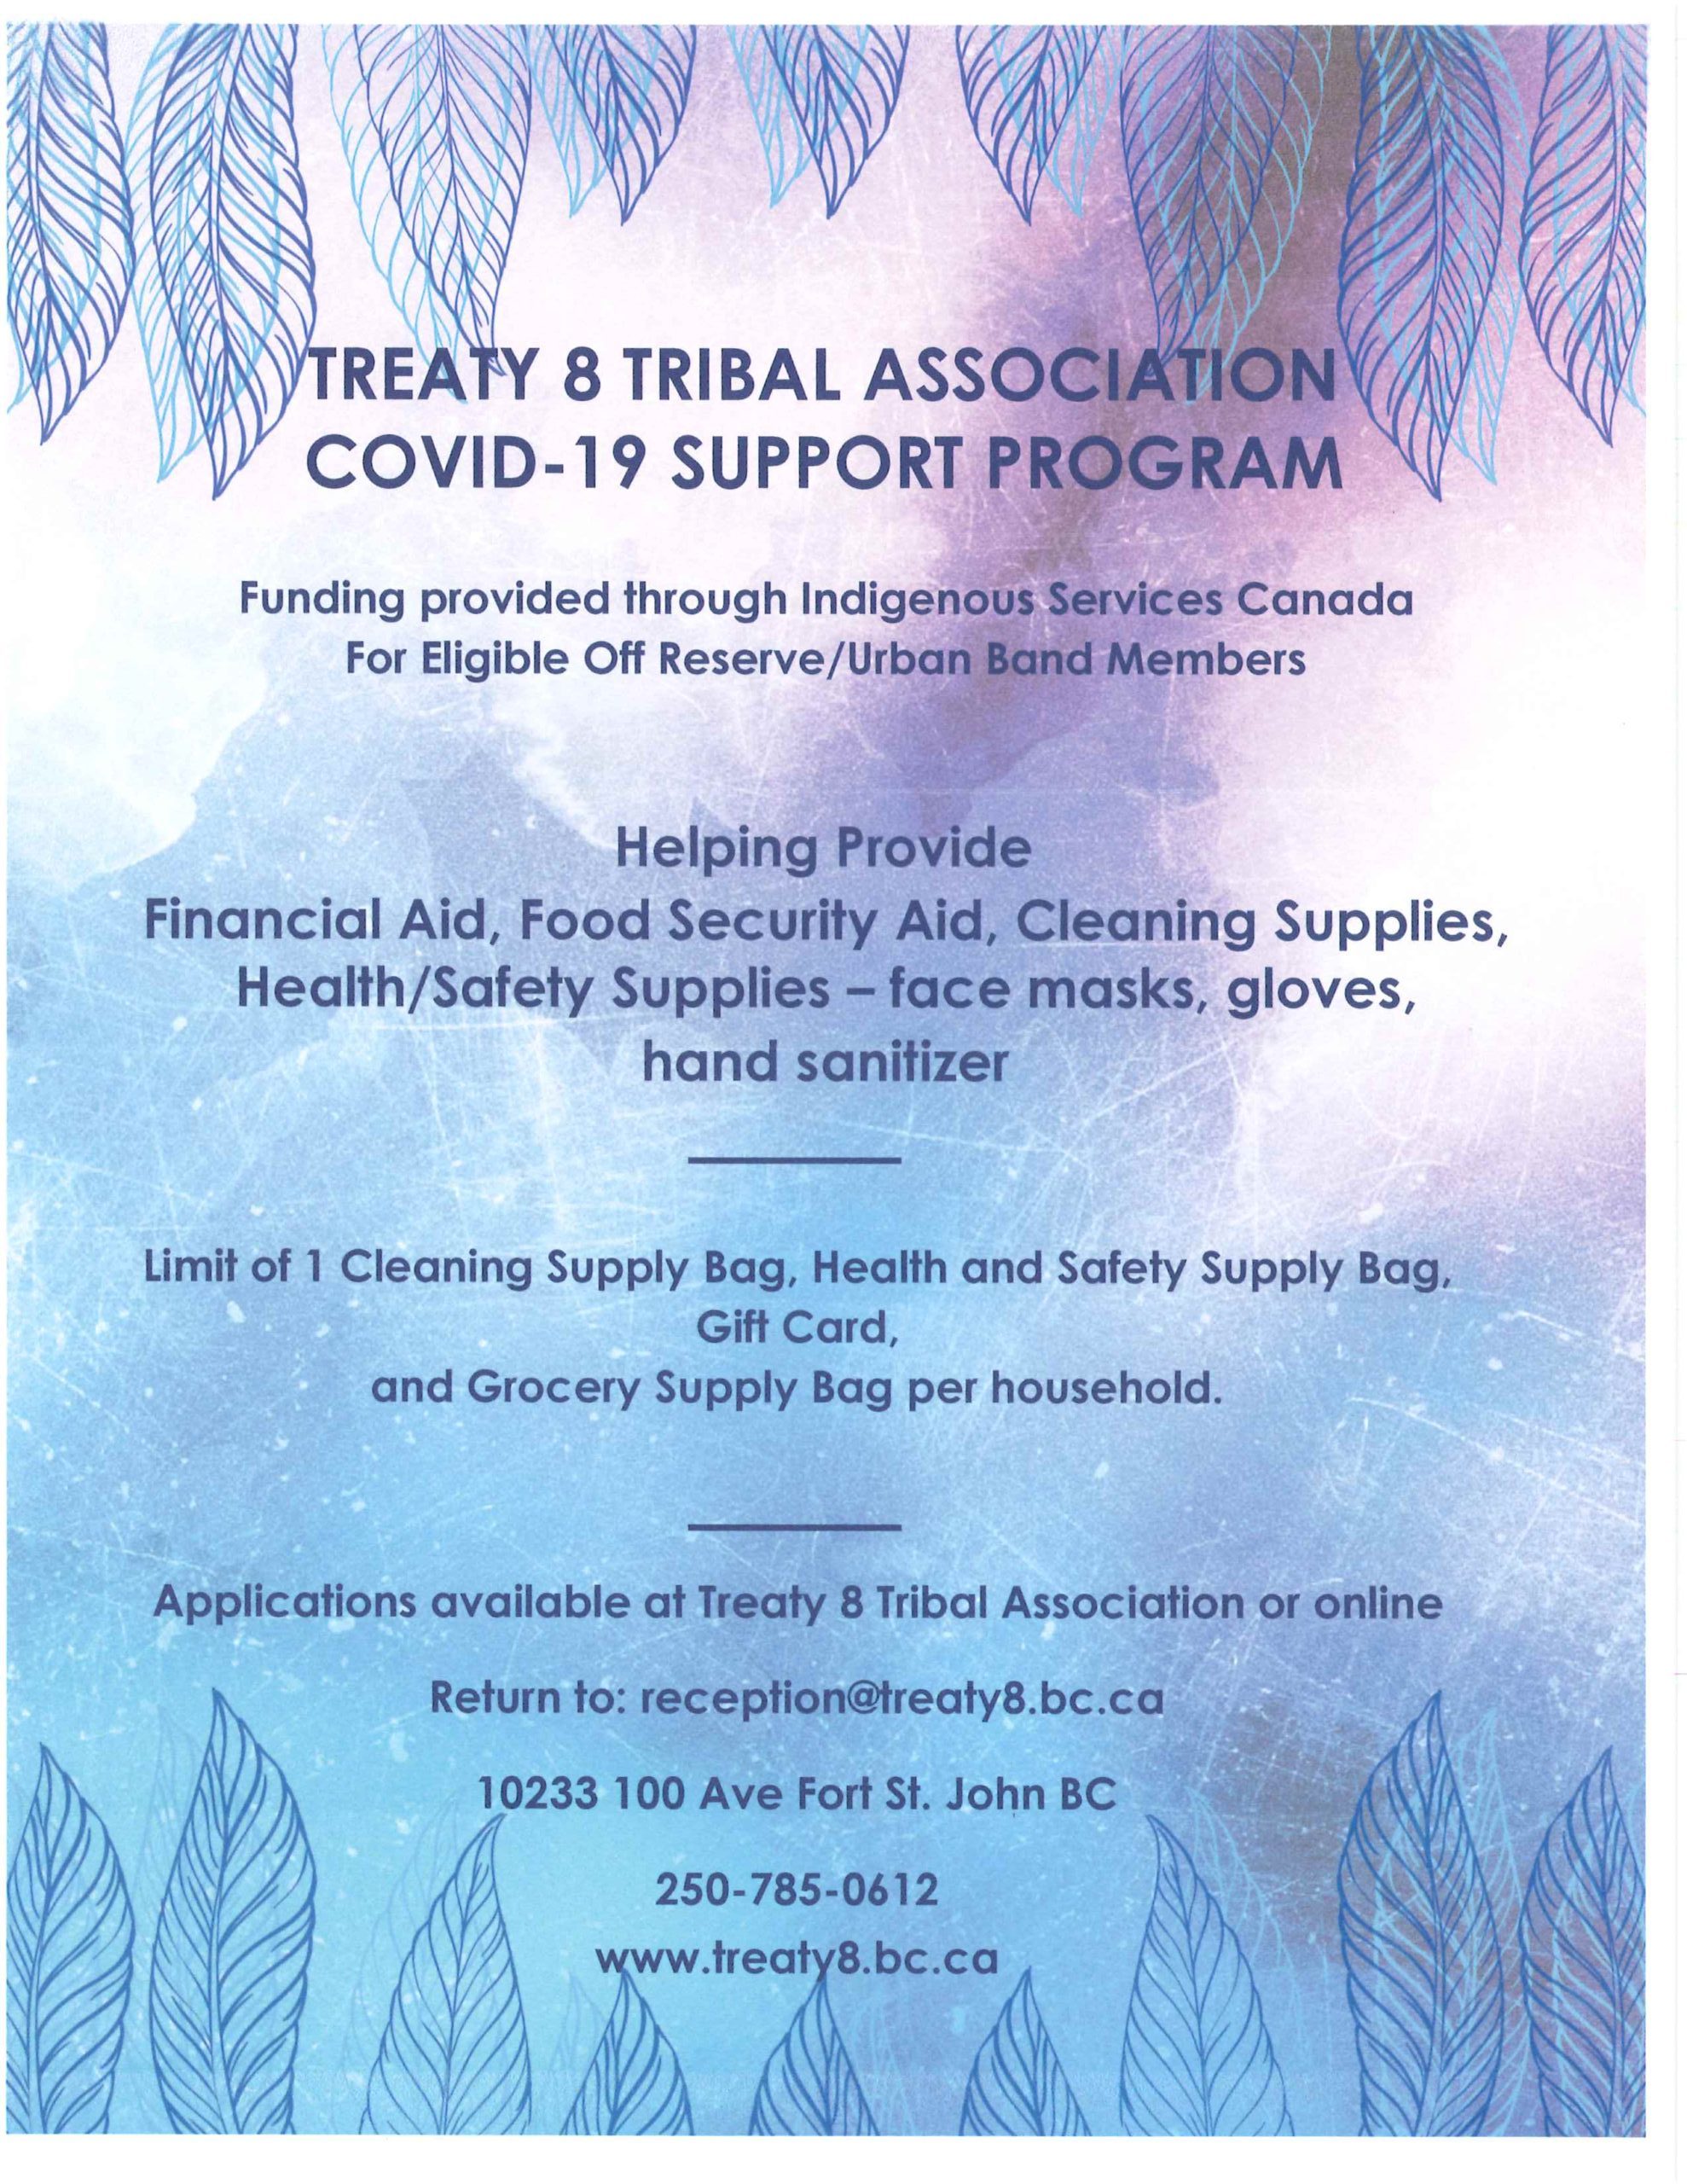 COVID-19 SUPPORT PROGRAM @ Treaty 8 Tribal Association